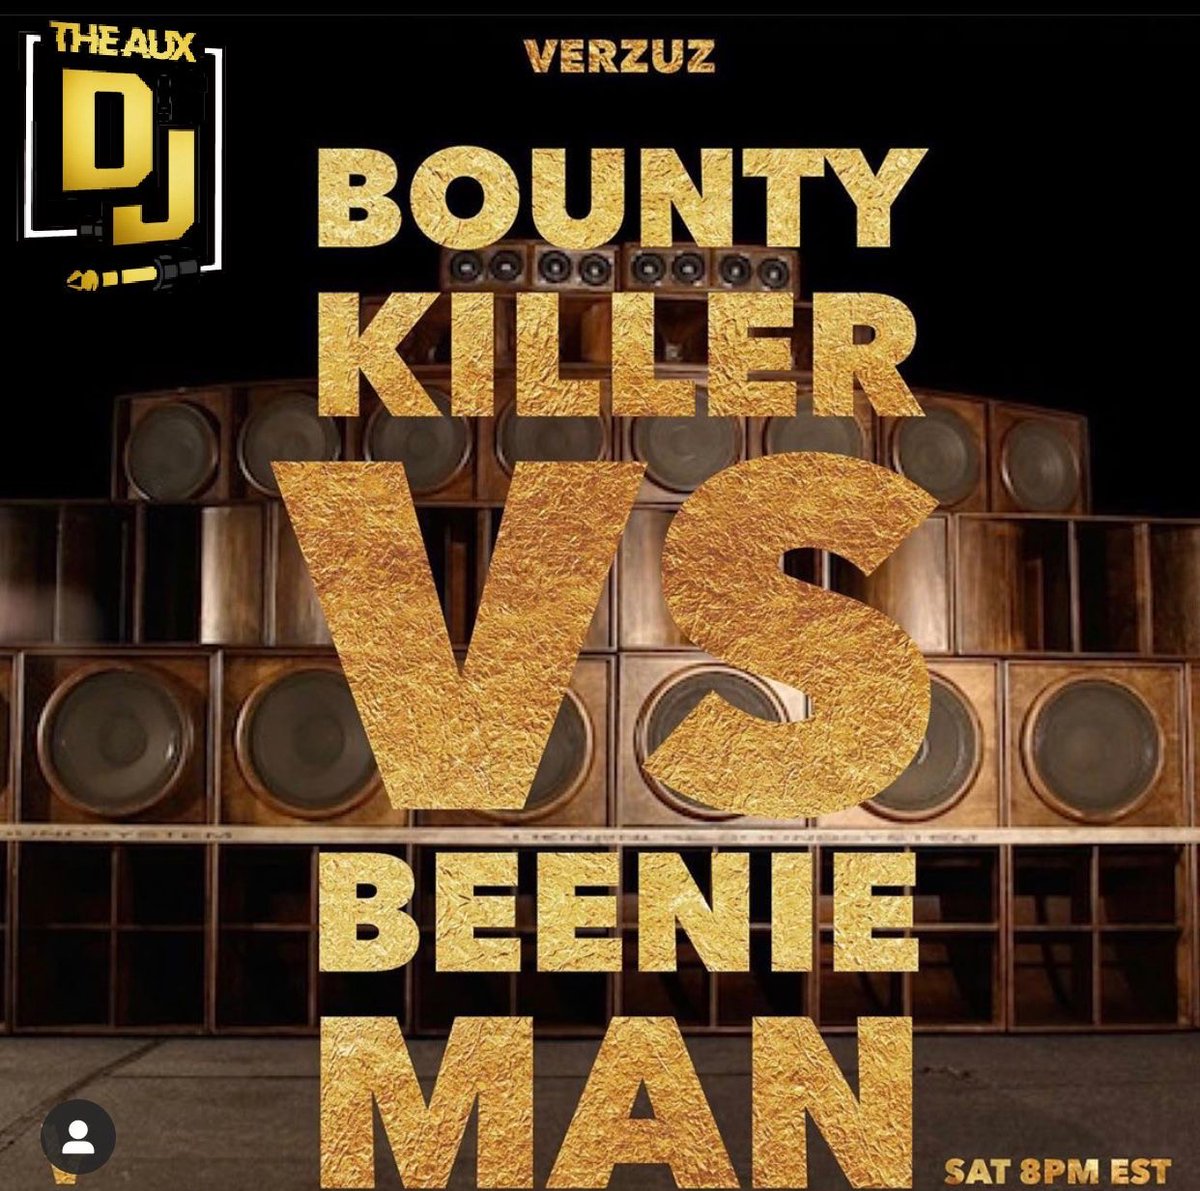  #Stream : Bounty Killer vs Beenie ManYour Playlist Is Ready!  #Tidal:  https://tidal.com/browse/playlist/322b0691-8d1e-4bf0-bcef-7675fafacd00 #AppleMusic:  https://music.apple.com/us/playlist/bounty-killer-vs-beenie-man/pl.u-lEYASg2Wkrz #Spotify:  https://open.spotify.com/playlist/79gWvXADTQBIf6Zhd5gh62?si=rtdCmvolRlKONOJToBhQ4Q #Youtube:  https://www.youtube.com/playlist?list=PLTjImHNV-pq9ZzyjEg2zun5IJMyFm1N00 #TheAuxDJ  #Verzuz  Show this thread